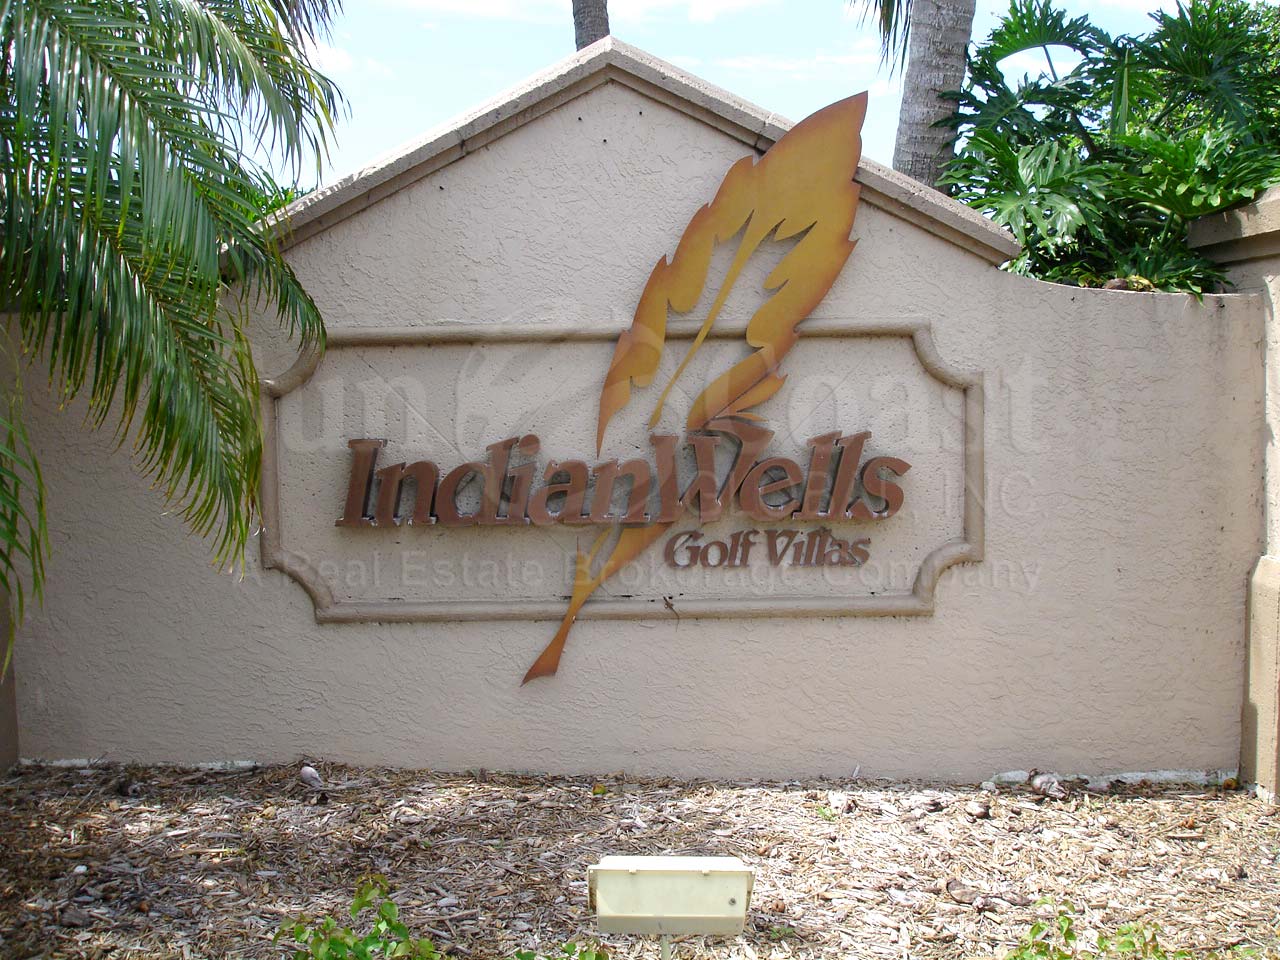 Indian Wells signage